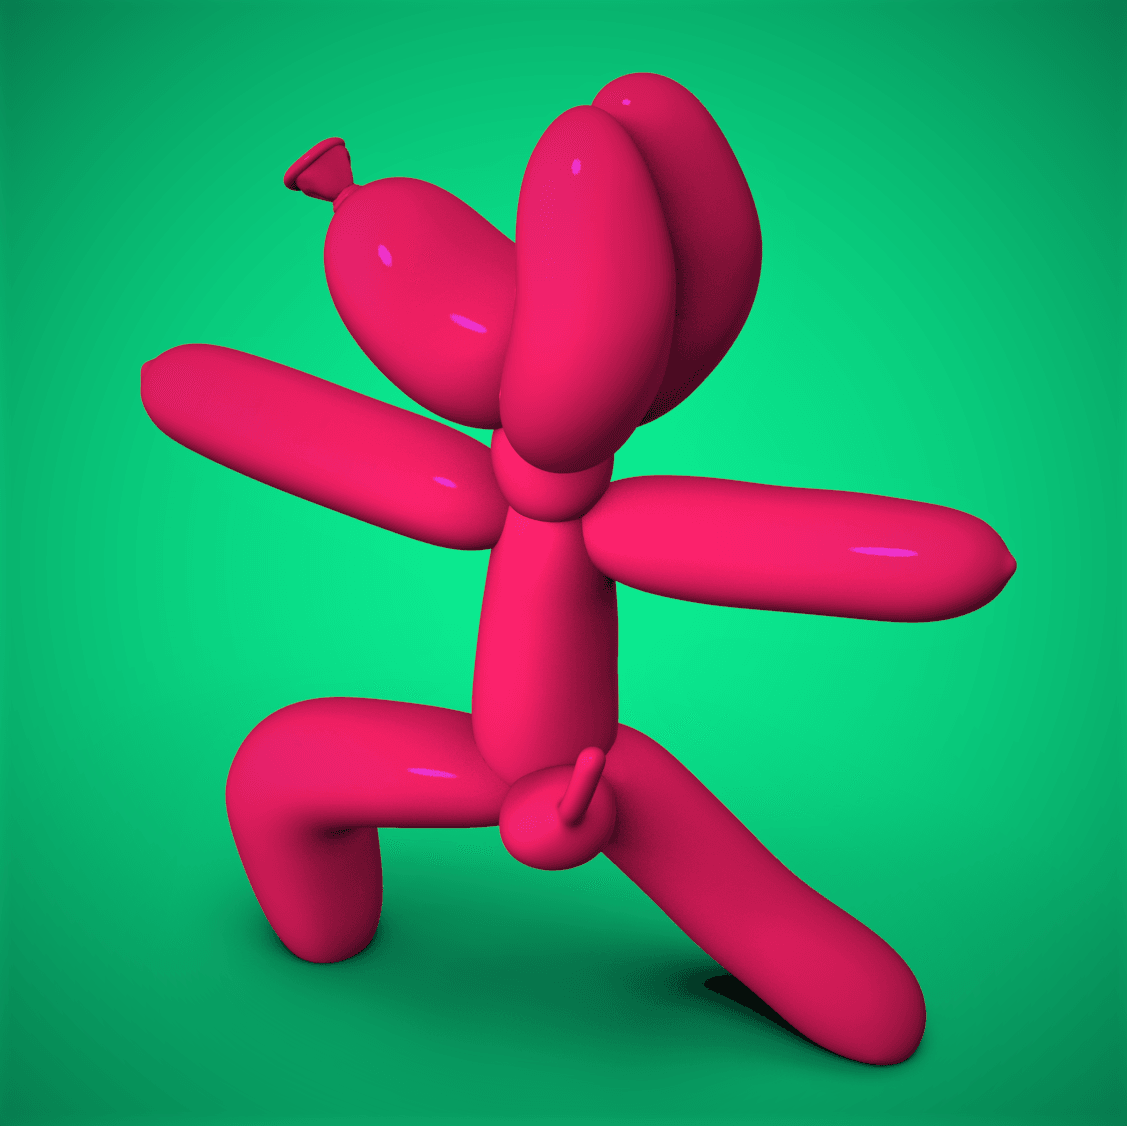 Balloon Doggy Yoga -Warrior2 Pose 3d model